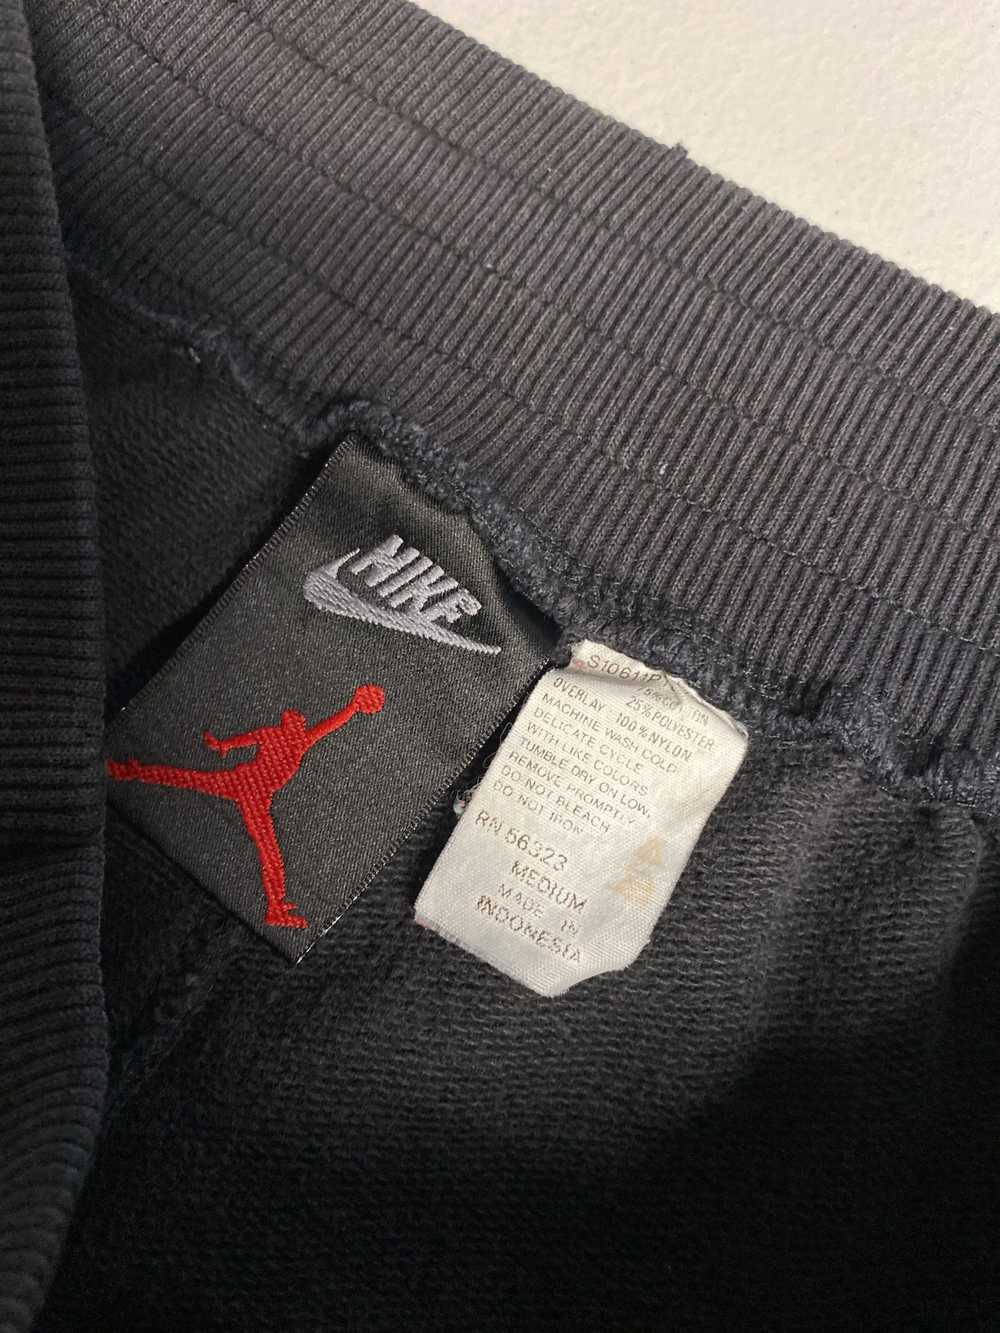 Faded Nike / Jordan sweats - image 4